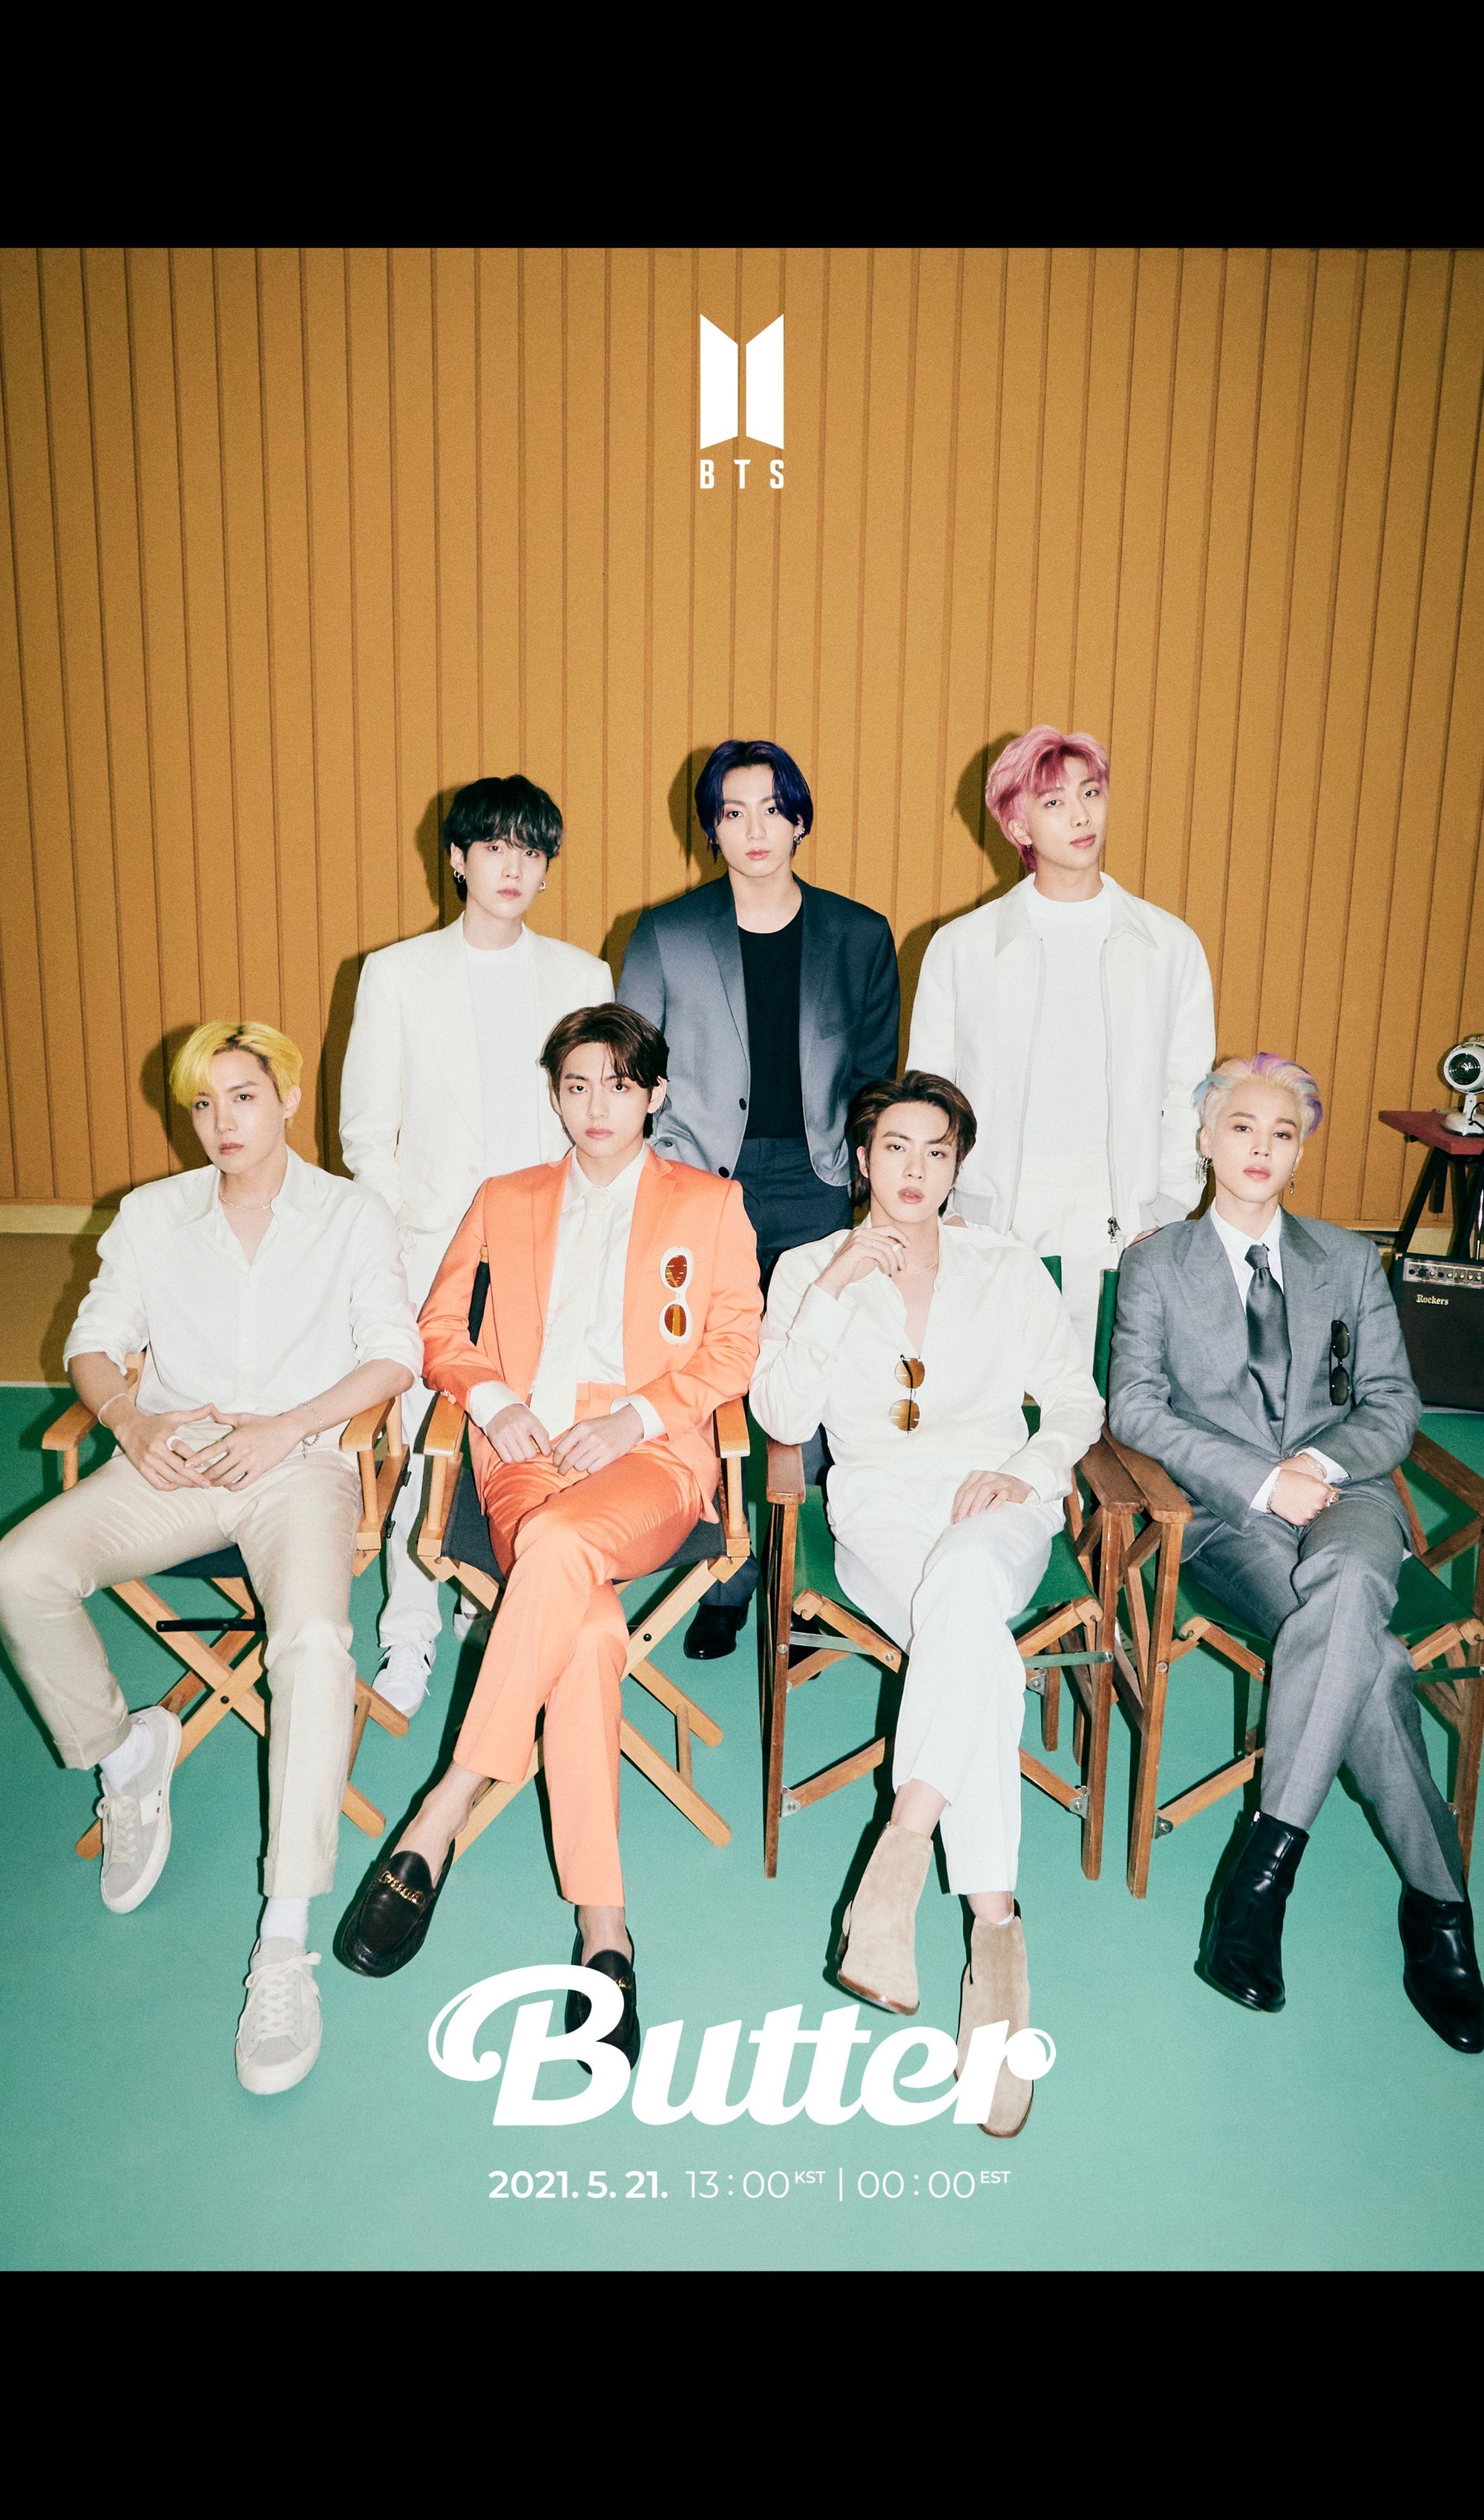 BTS BUTTER CONCEPT PHOTOS | K-PopMag